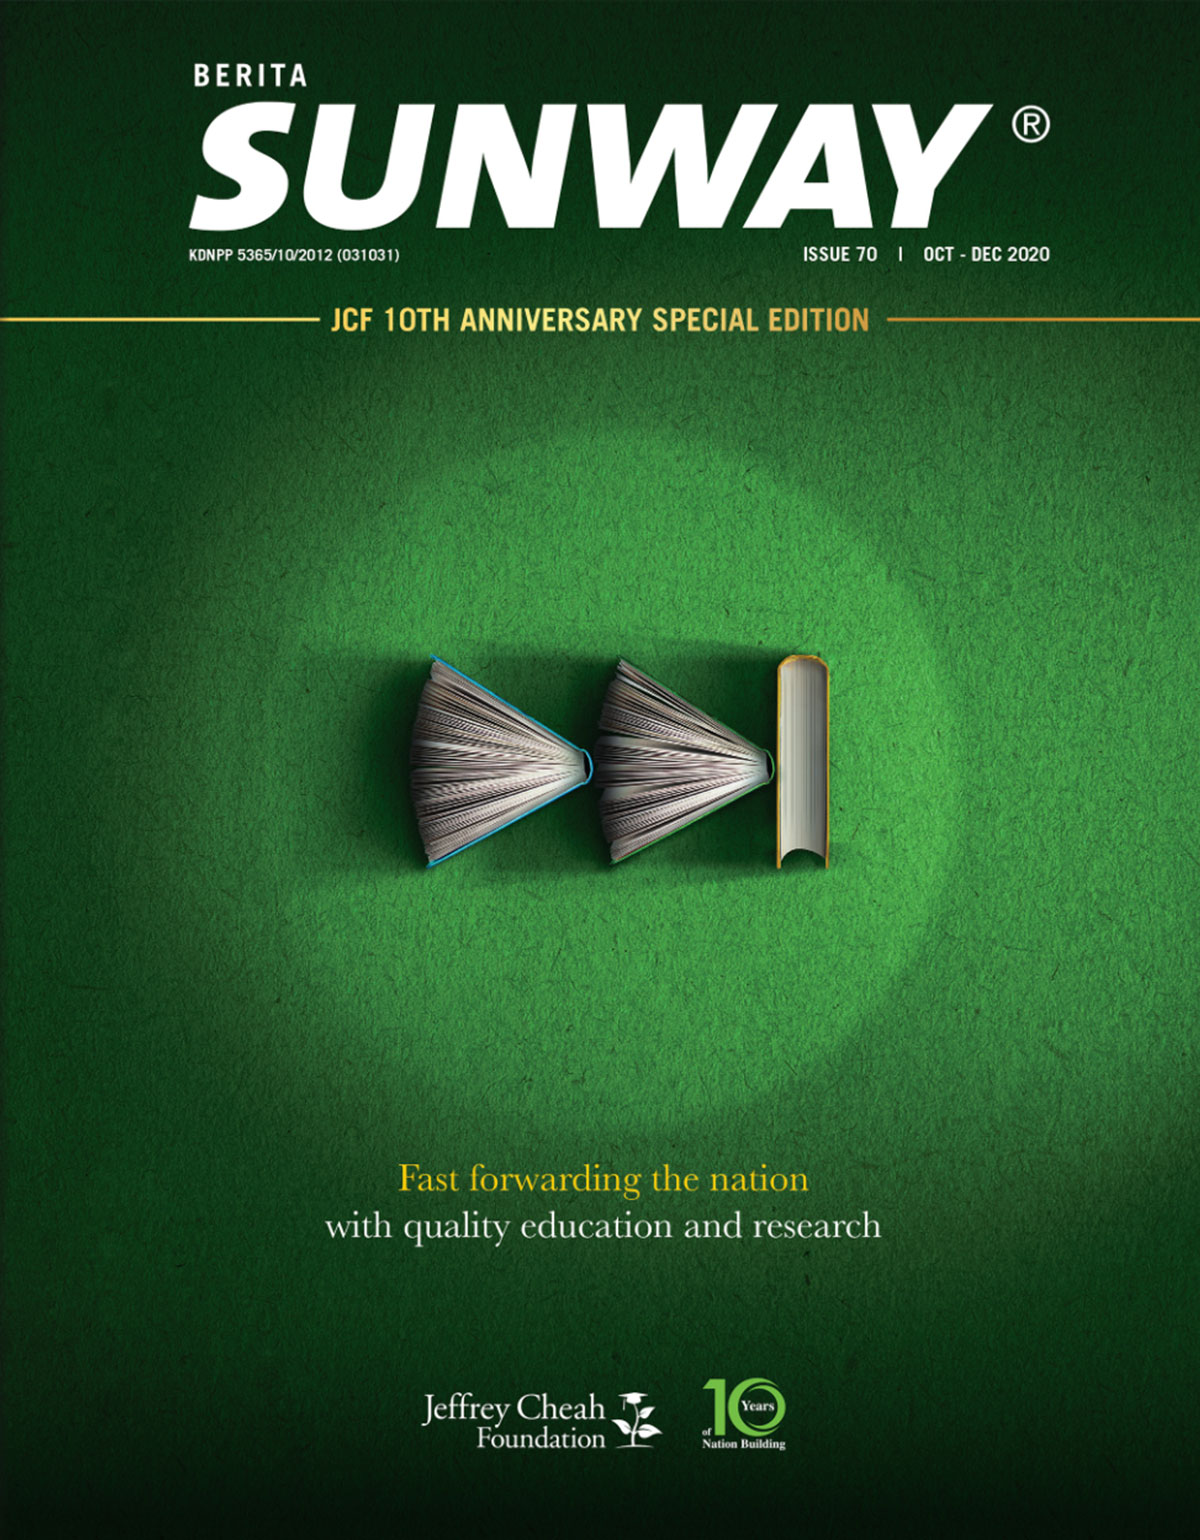 Berita Sunway Issue 70